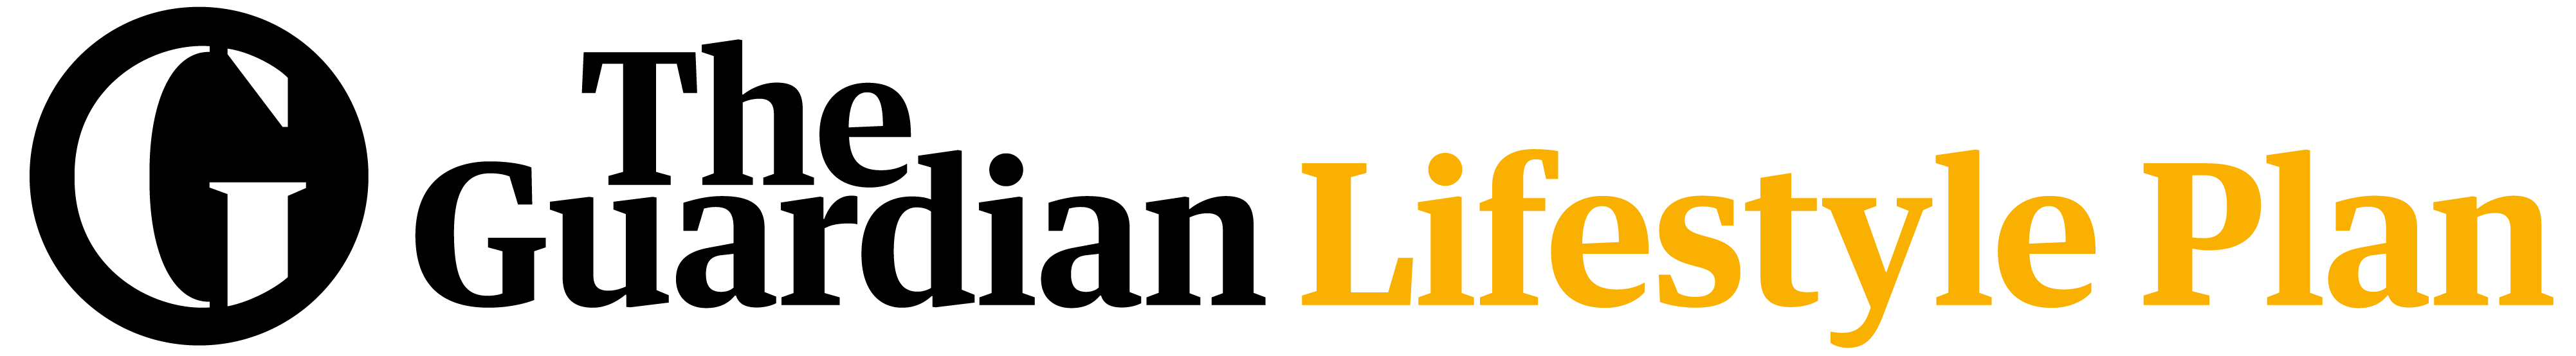 The Guardian Lifestyle Plan logo